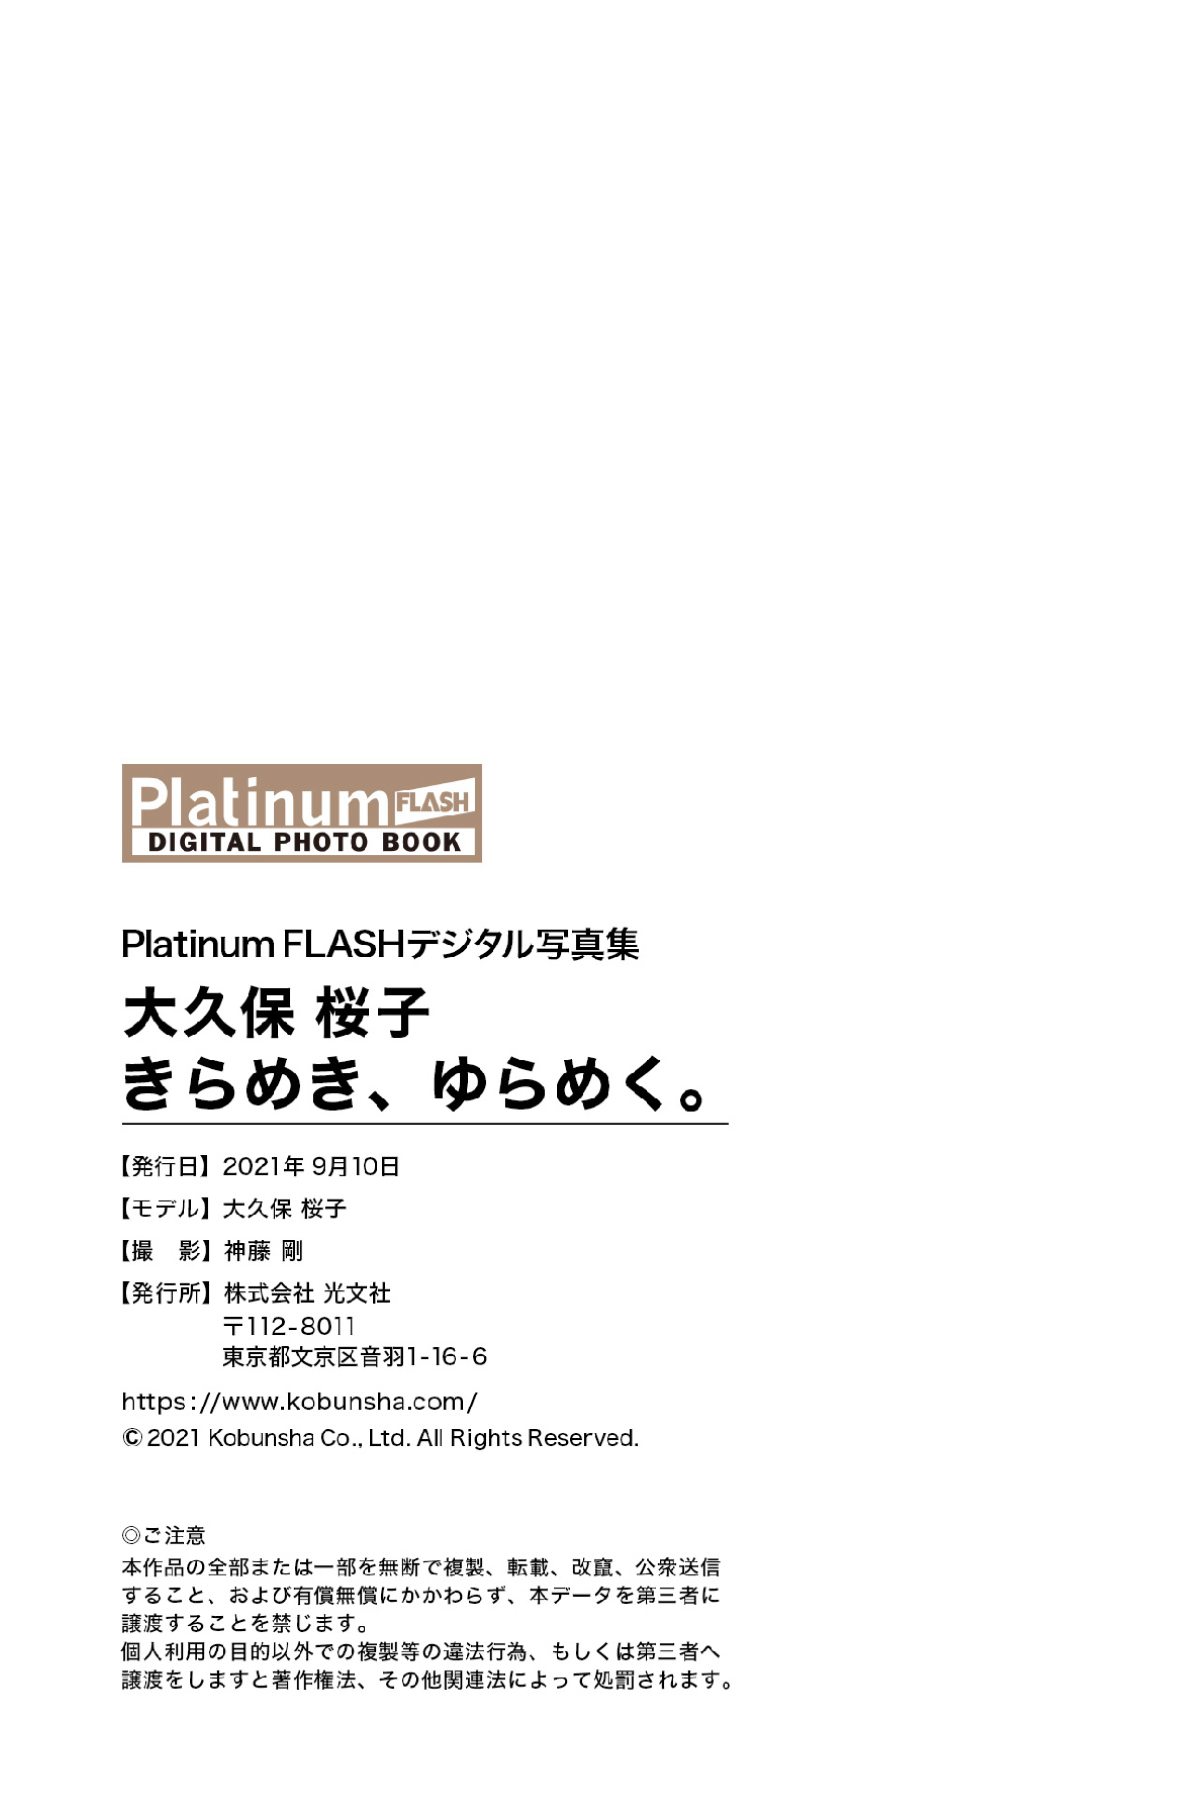 Platinum FLASH Photobook 2021 09 10 Sakurako Okubo 大久保桜子 Glitter shimmer きらめき、ゆらめく 0062 7977118174.jpg